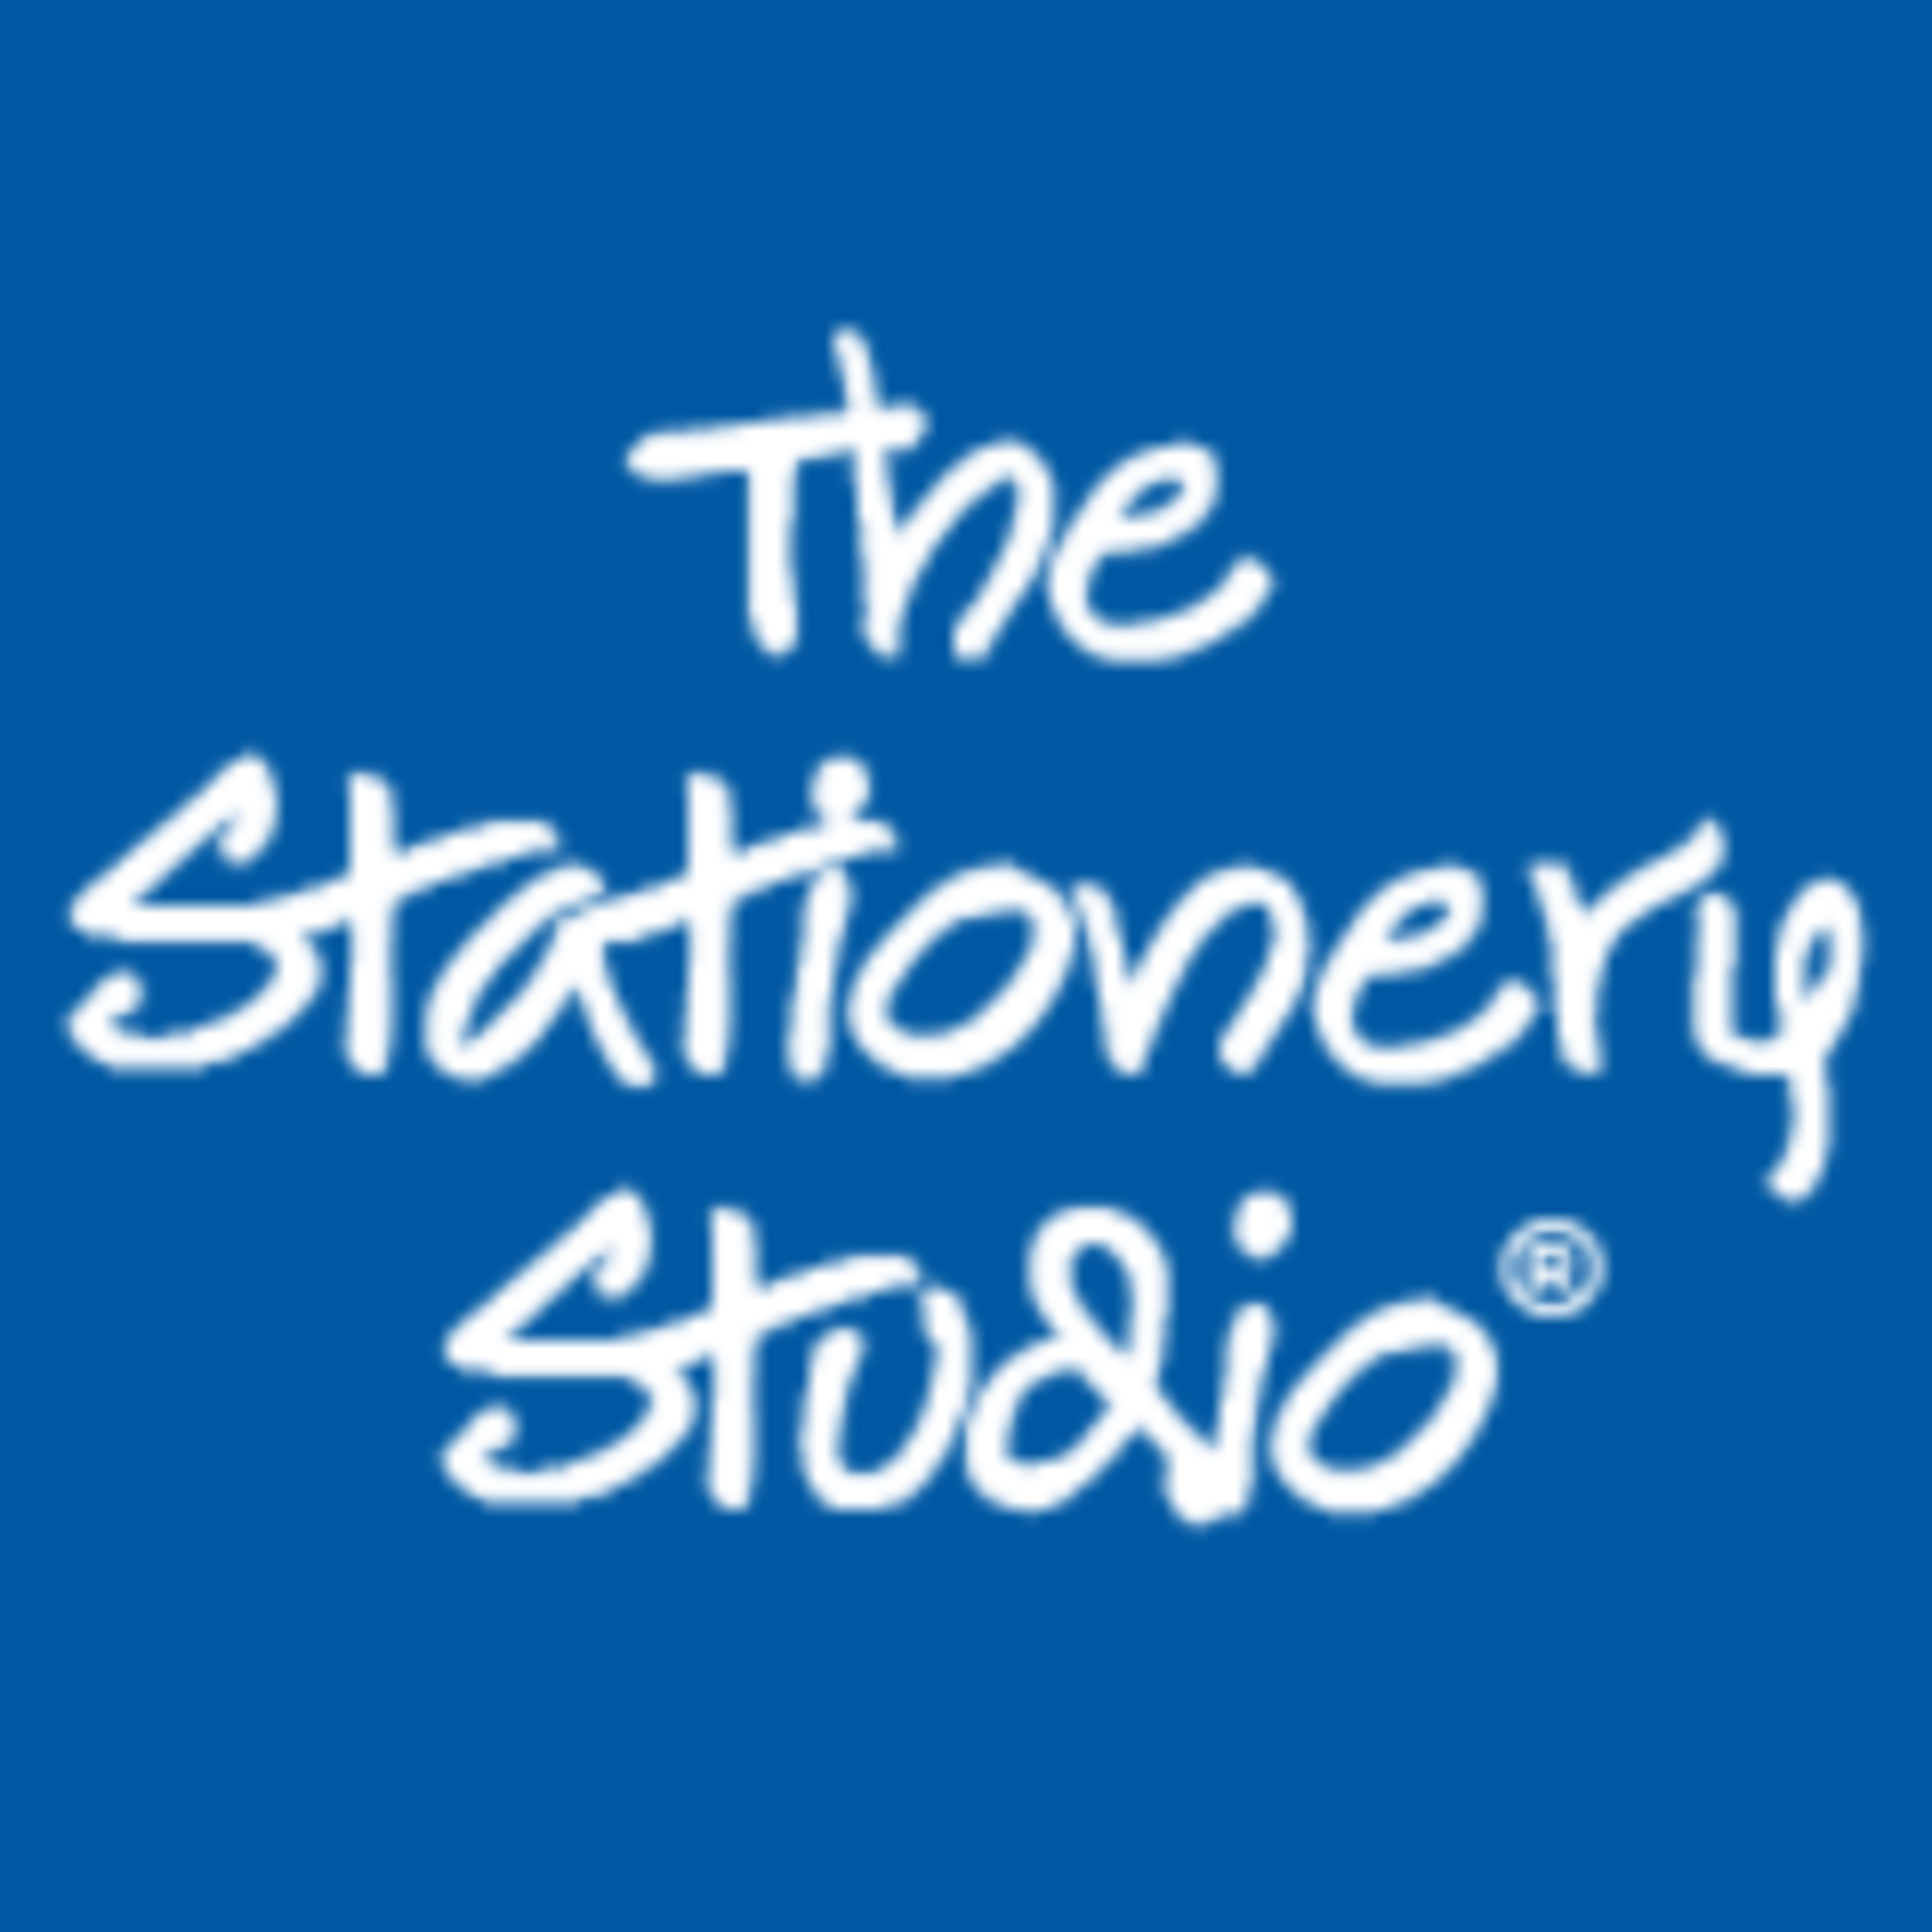 The Stationary StudioCode